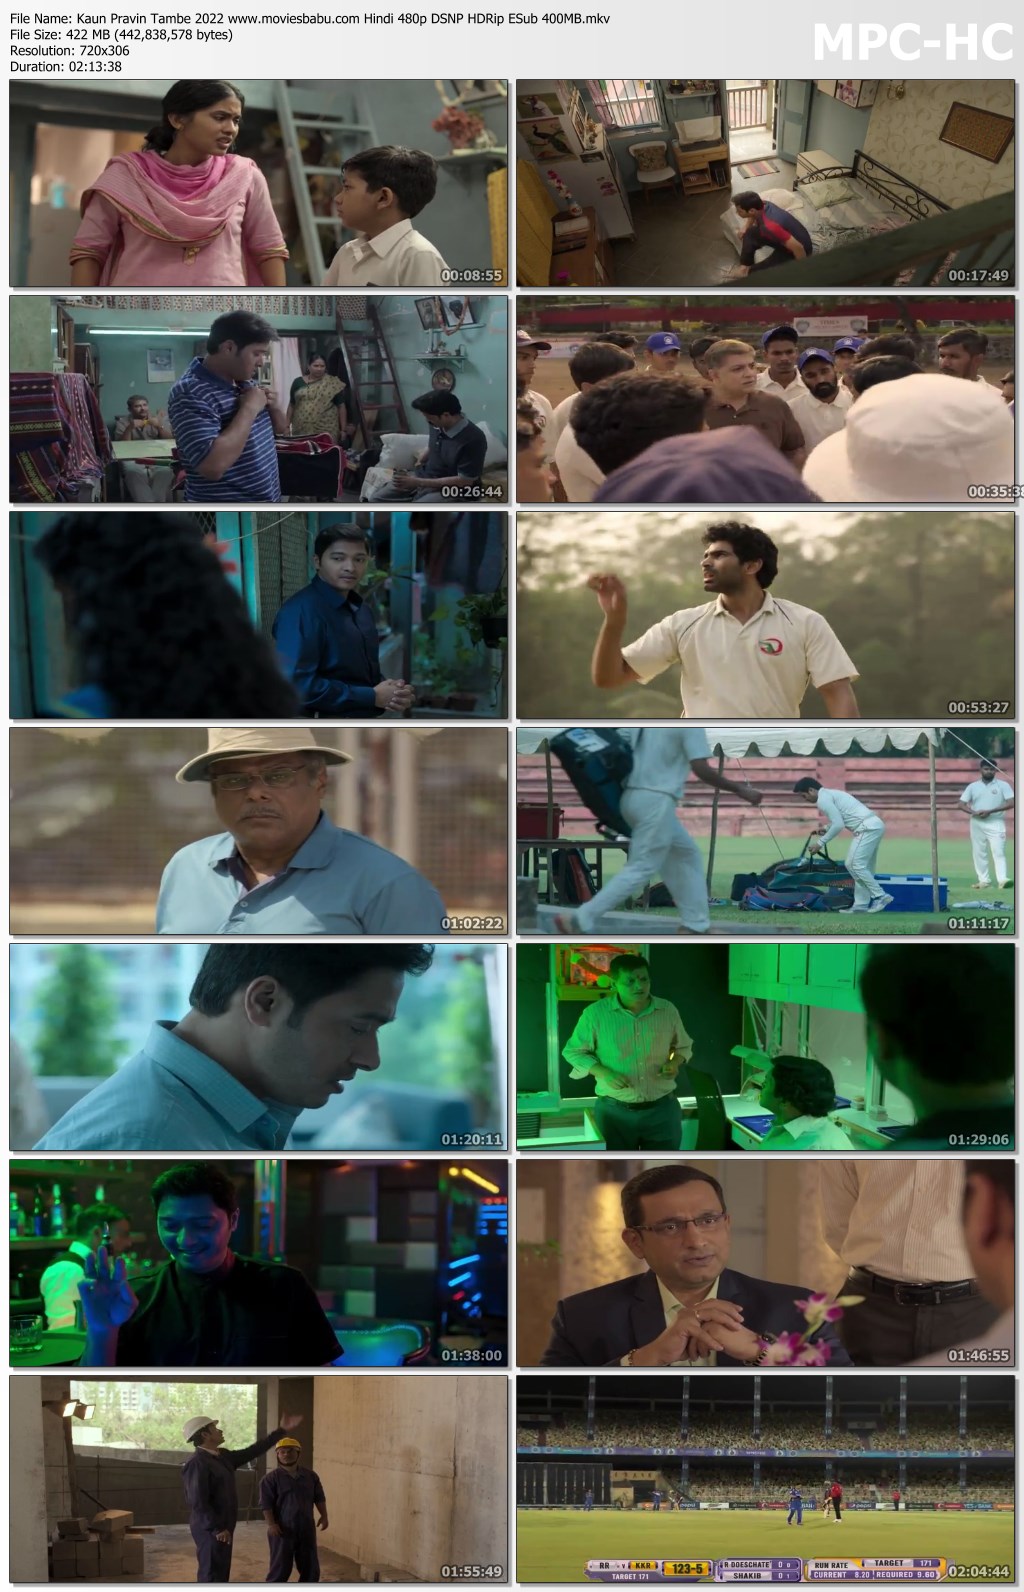 Kaun Pravin Tambe 2022 Hindi Movie DSNP HDRip ESub Download